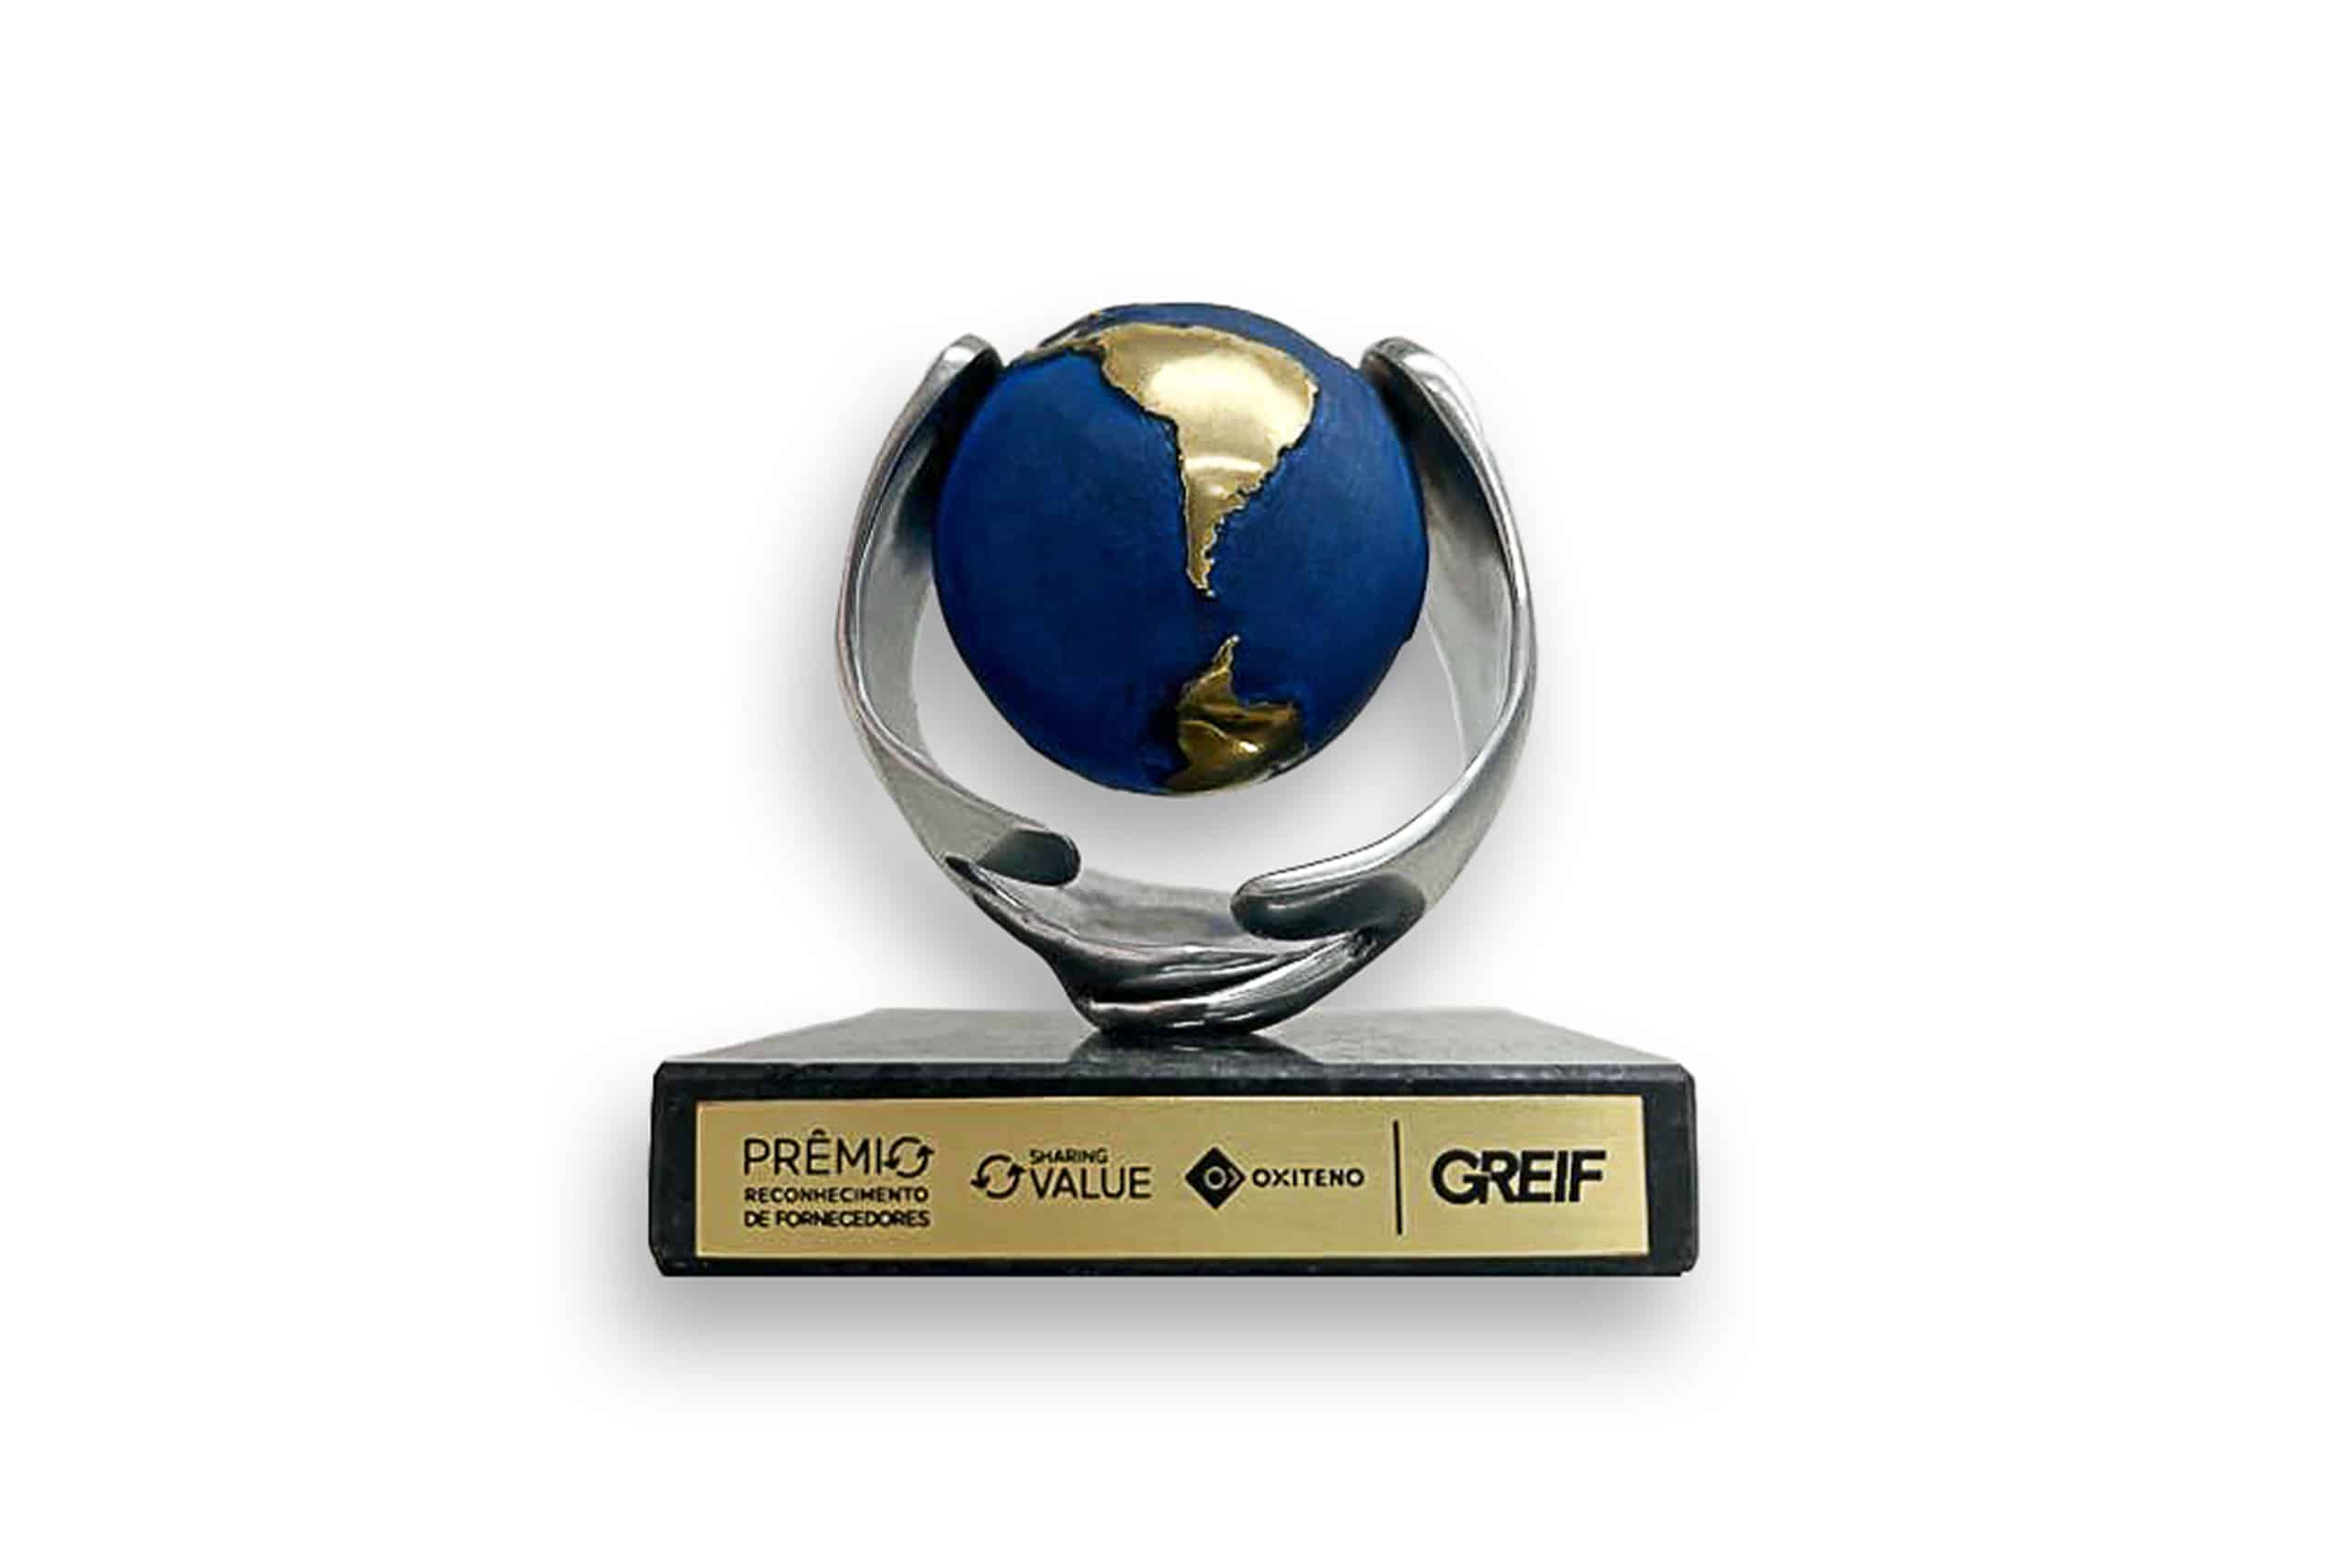 greif wins award from